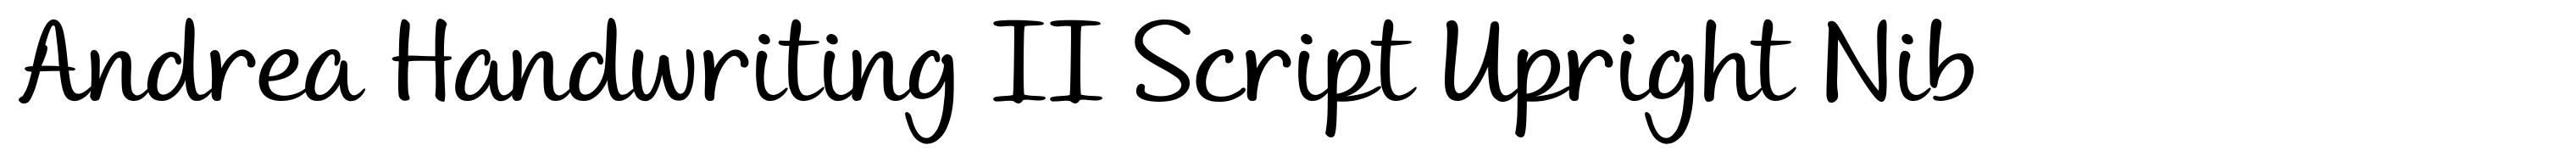 Andrea Handwriting II Script Upright Nib